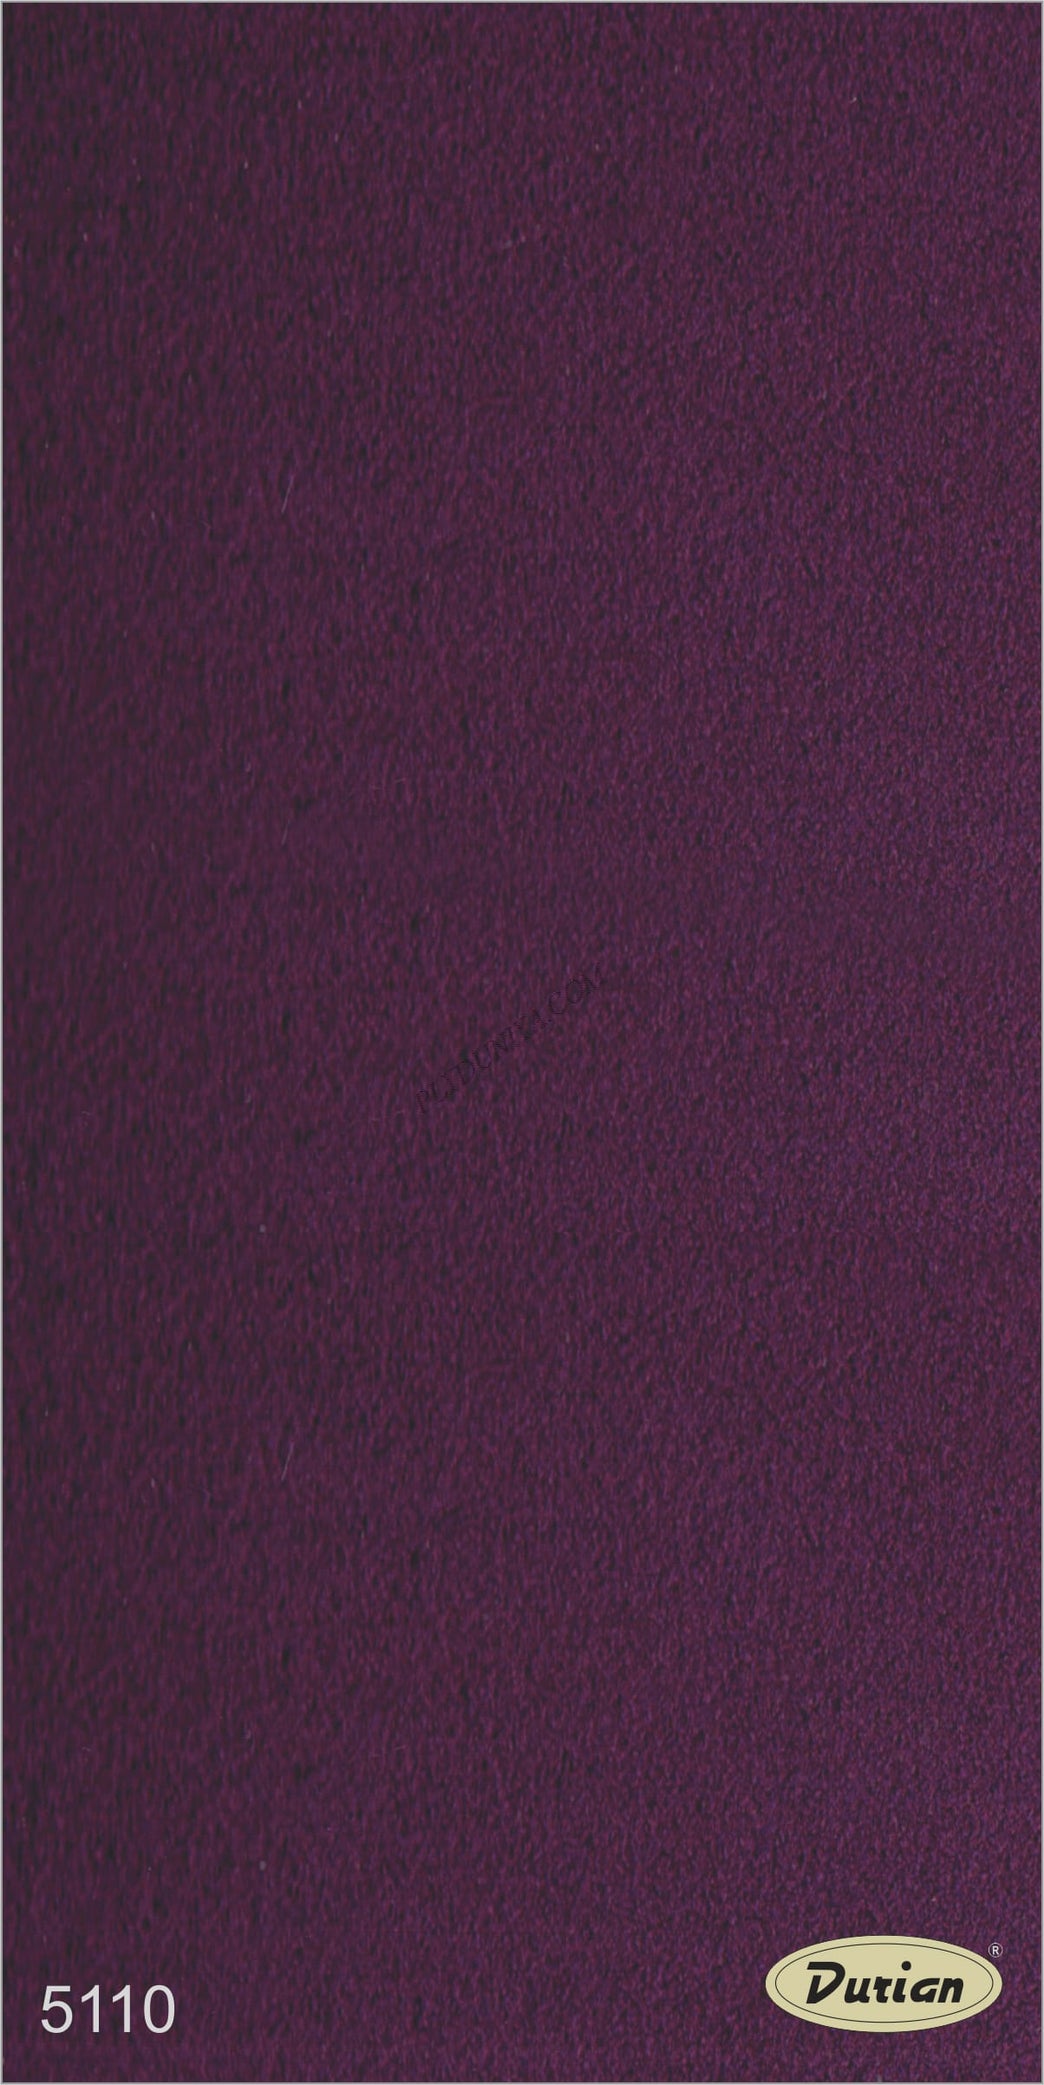 5110 UH++ 1.00 mm Durian - Romania Laminates Purple Metallic (Metallic)